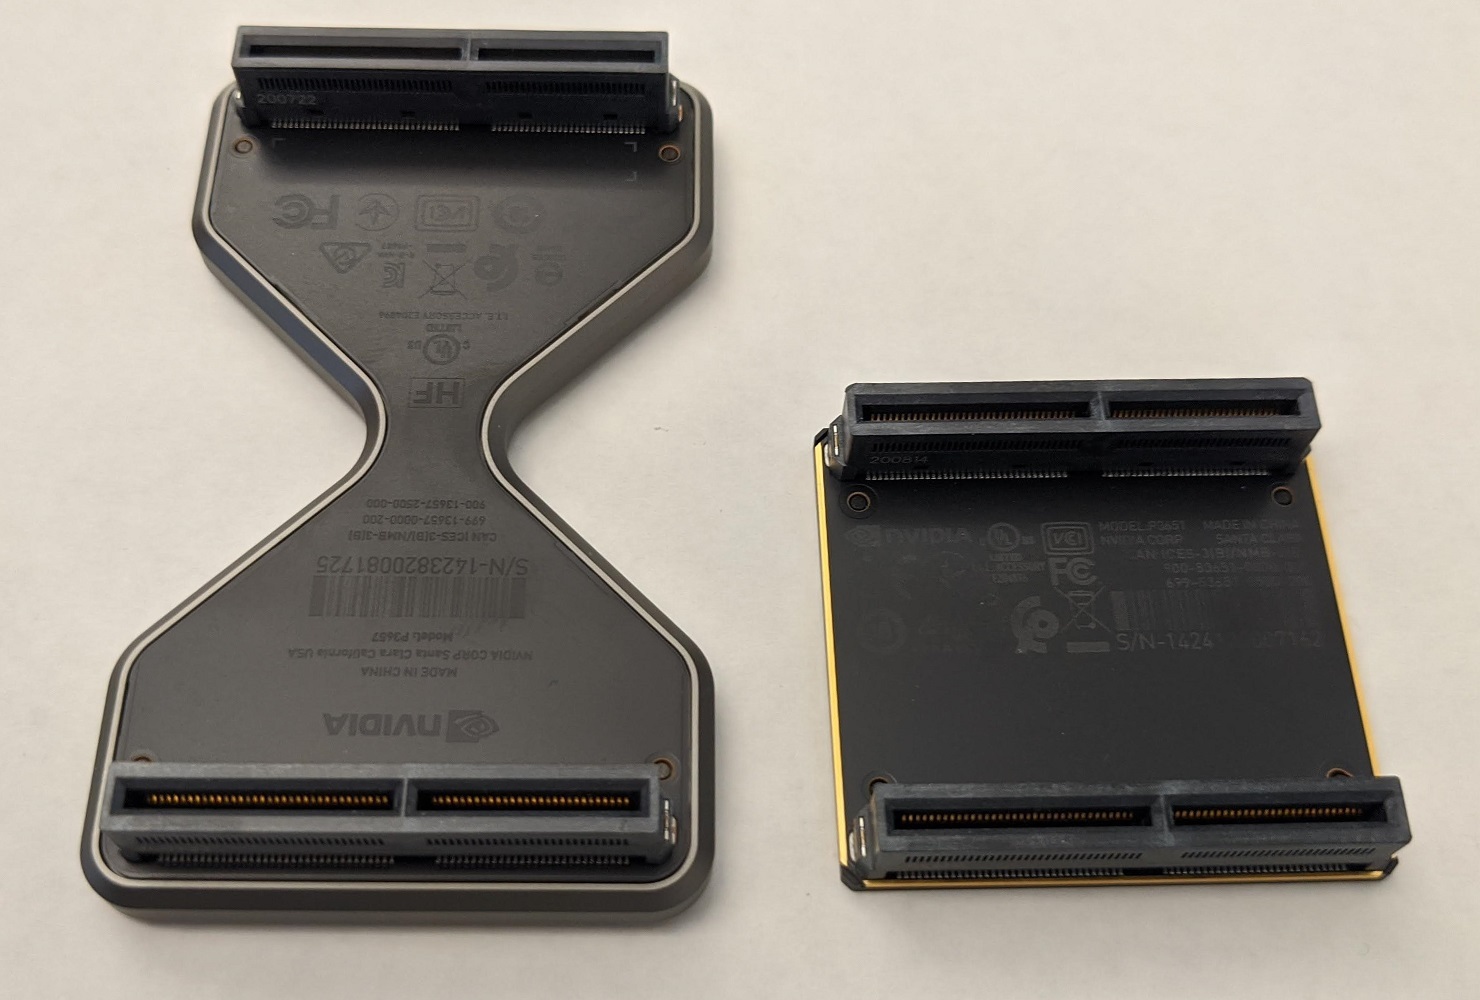 NVIDIA GeForce RTX 3090 and RTX A6000 NVLink Bridges (Bottom View)